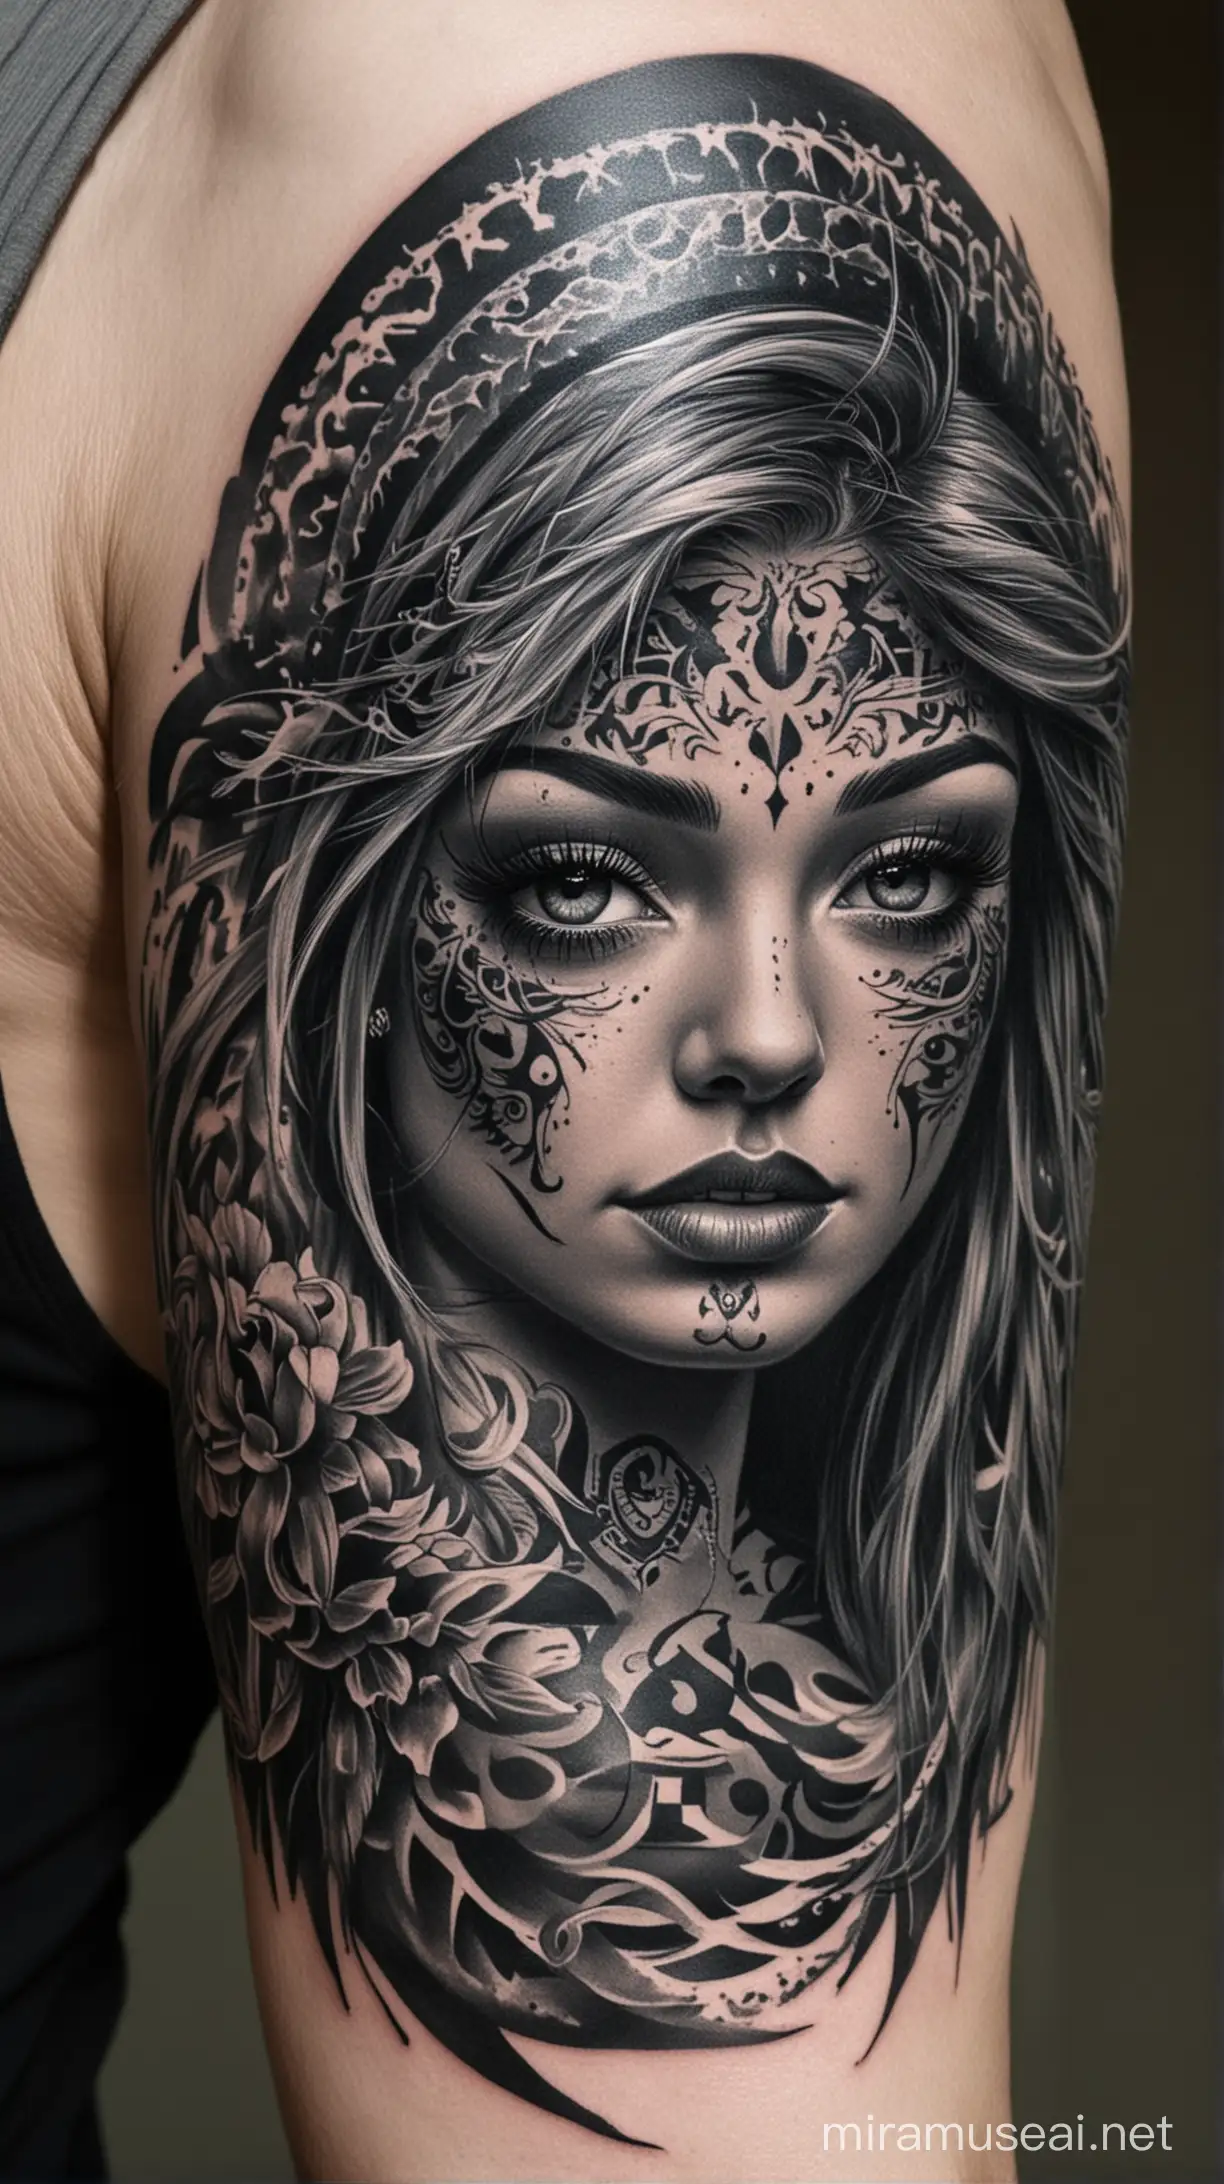 Elegant Black and Grey Tattoo Design